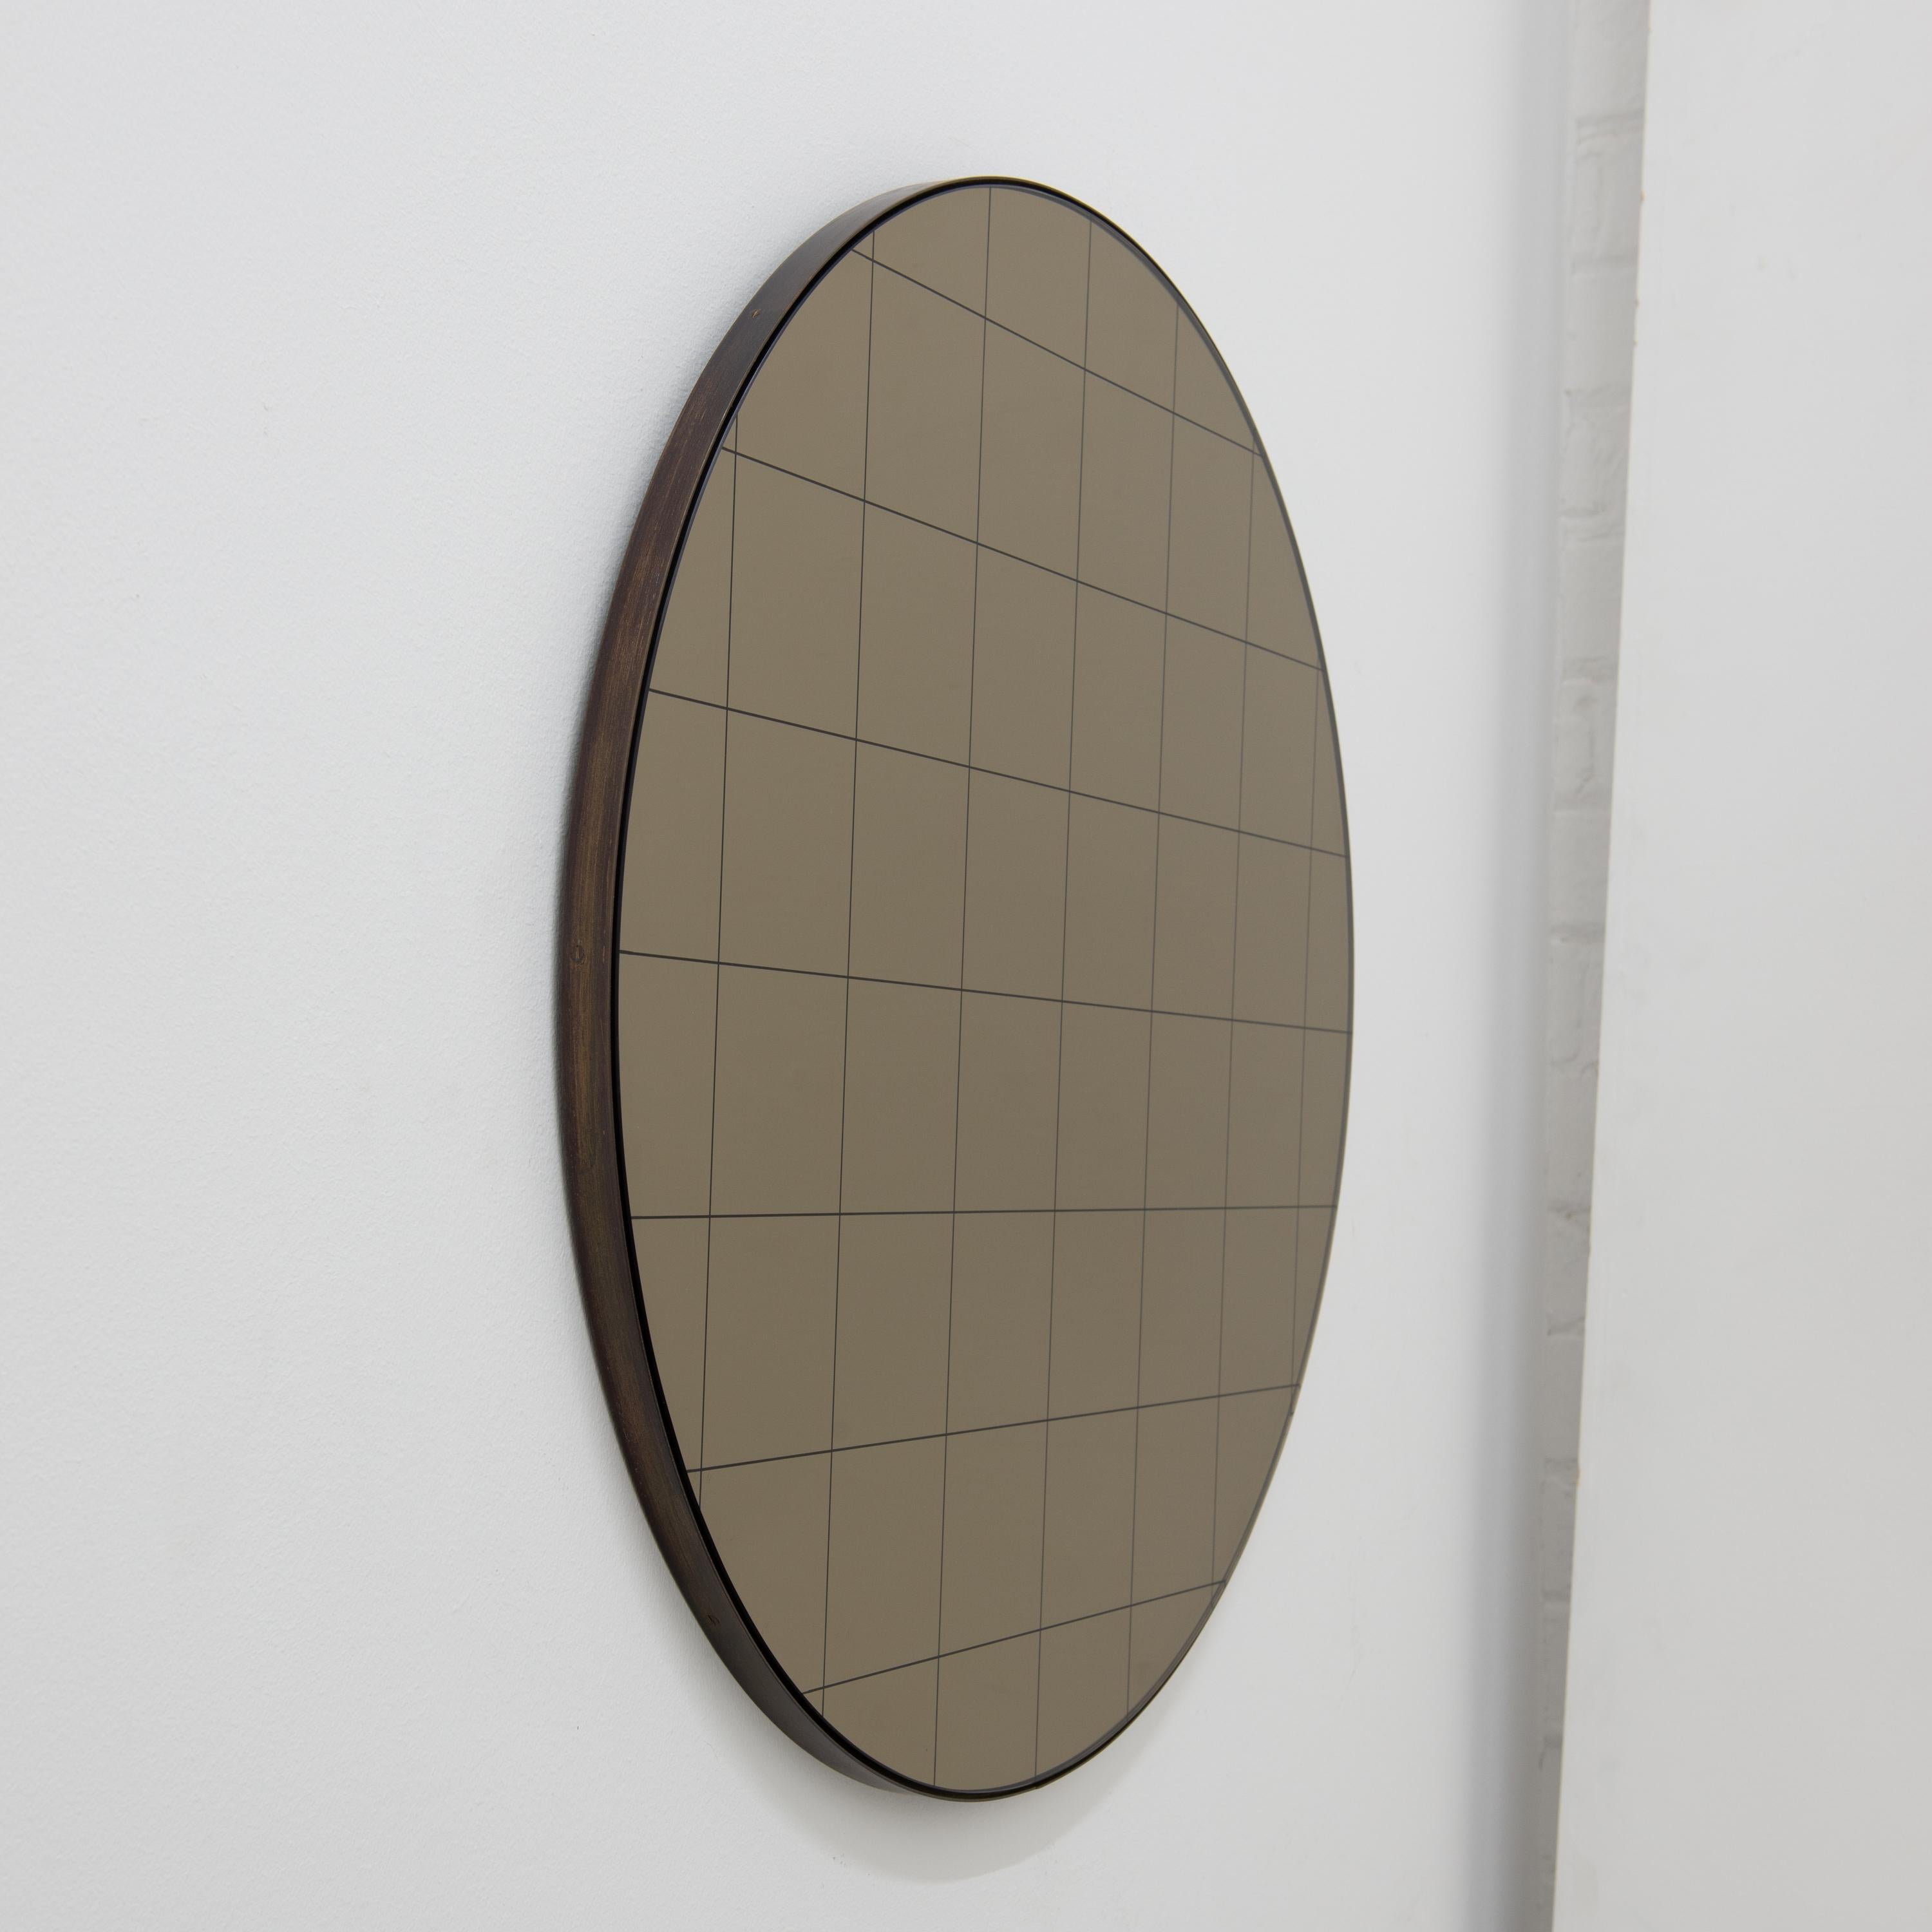 British In Stock Orbis Bronze Round Mirror with Patina Frame, Medium For Sale